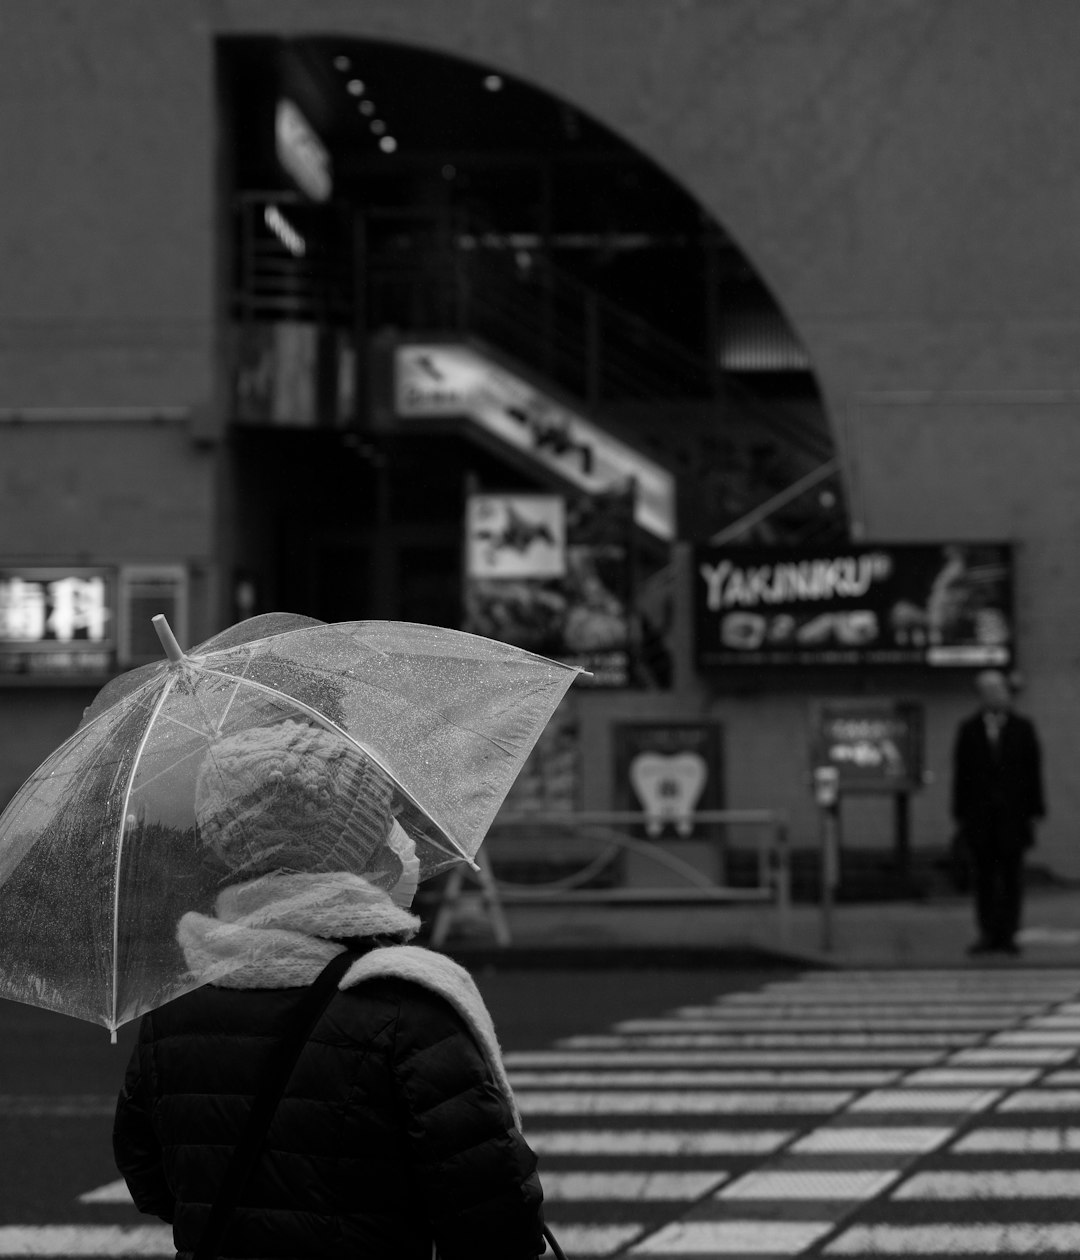 grayscale photo of person holding umbrella